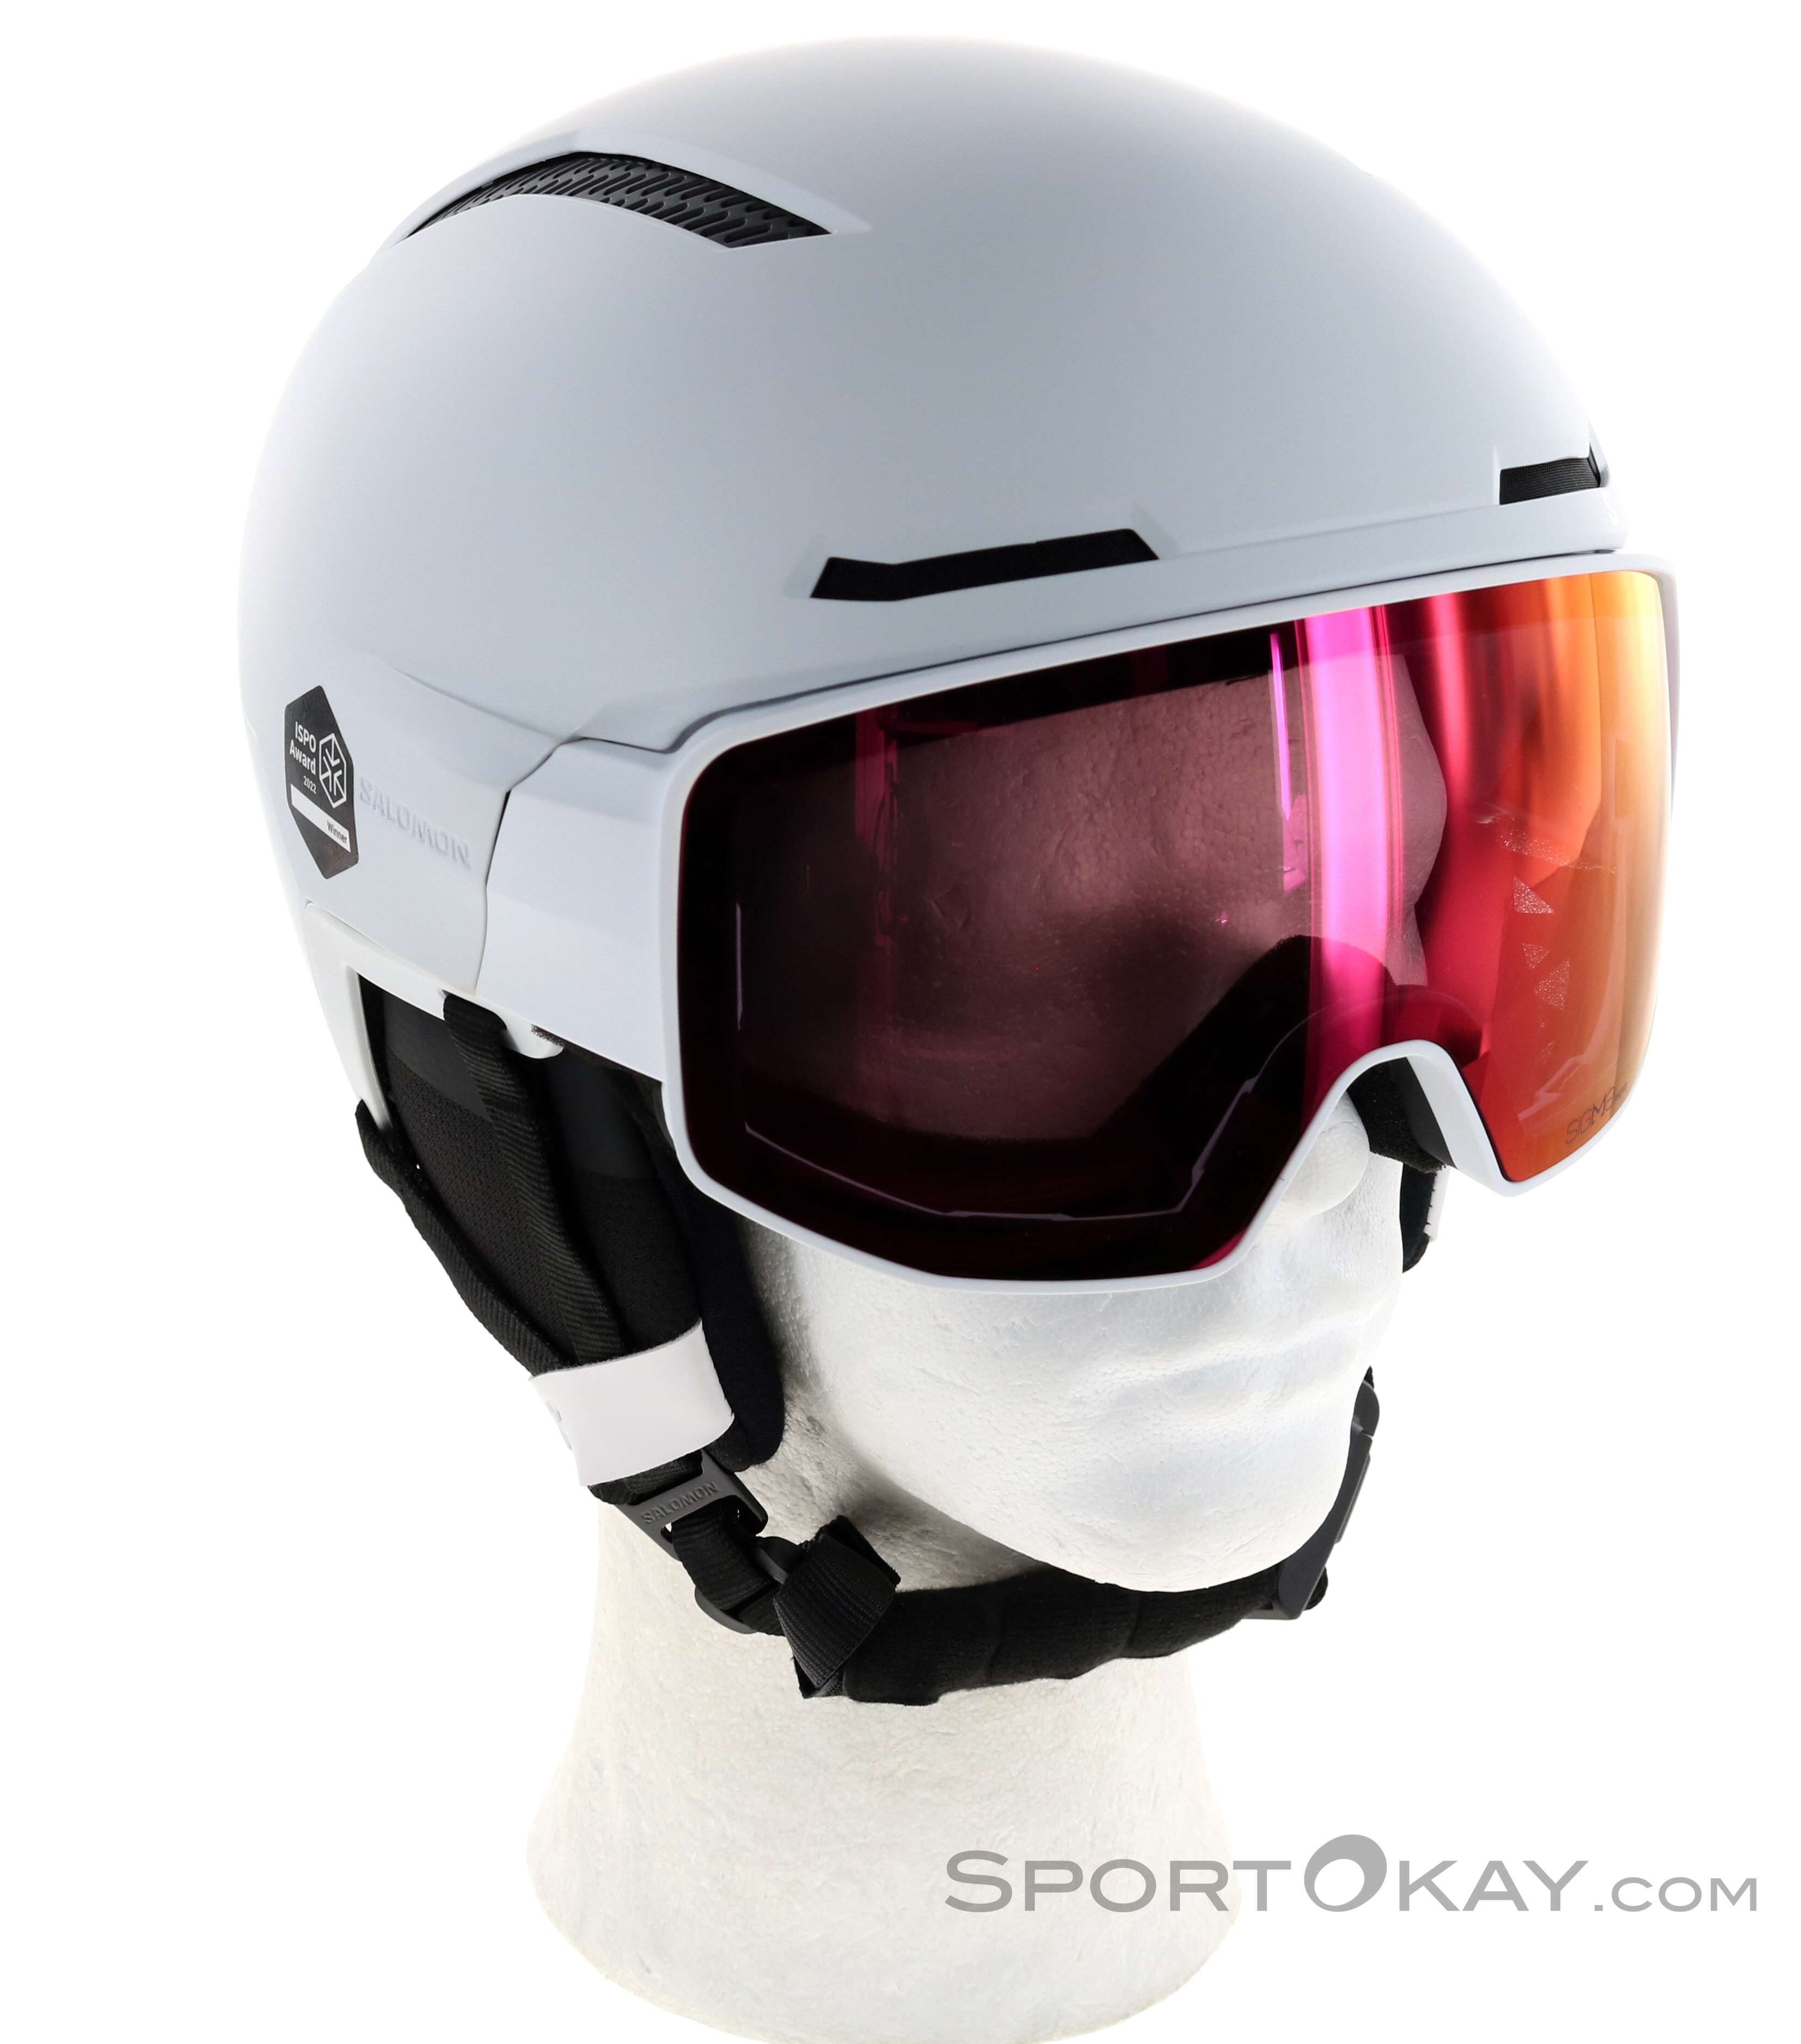 SALOMON Ski helmet DRIVER PRO SIGMA MIPS with visor